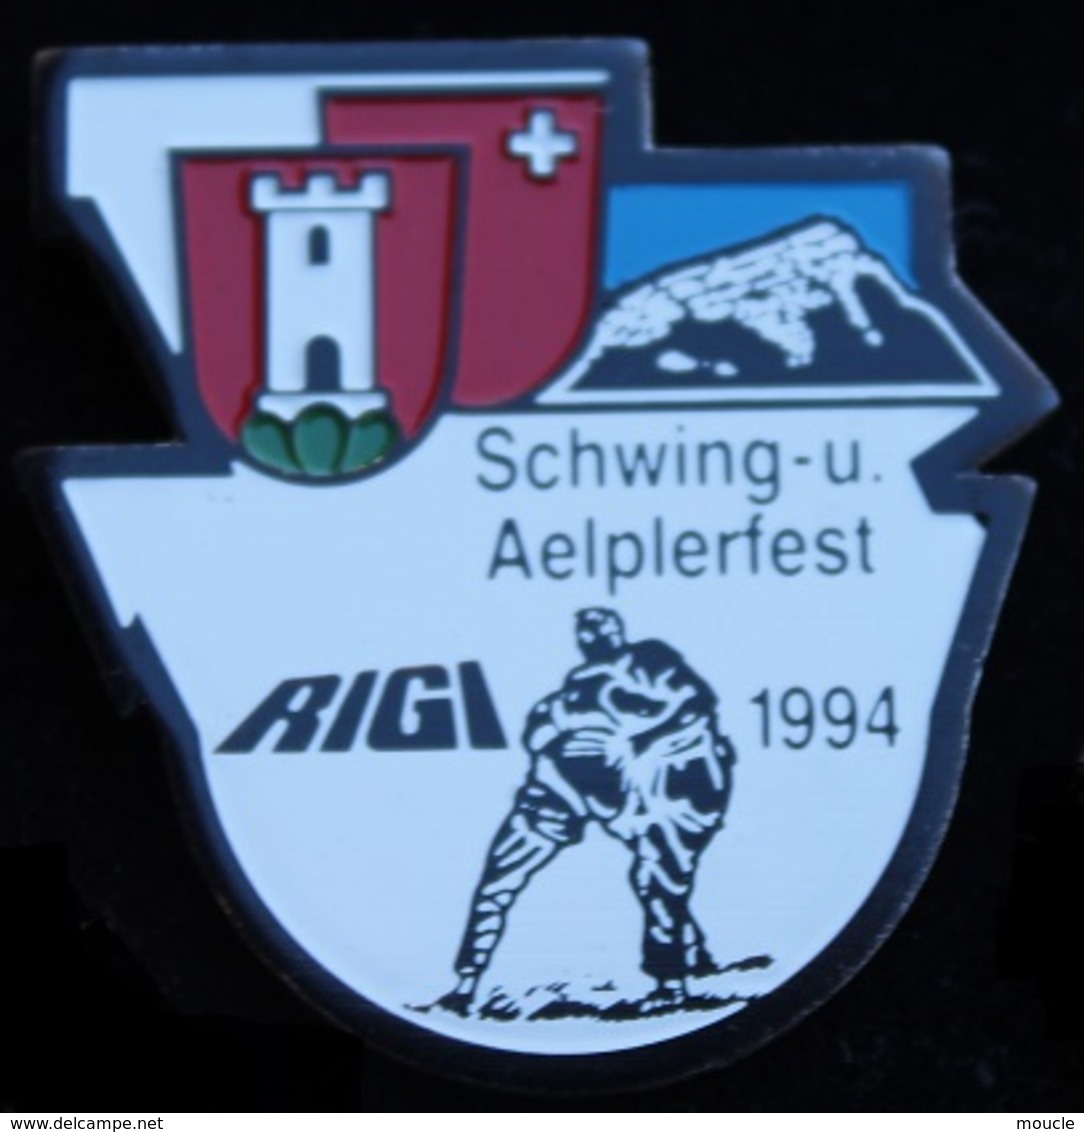 LUTTE SUISSE - LUTTEURS - SCHWING-U. - AELPERFEST - RIGI - 1994 - URI - SCHWEIZ - SWISS - SWITZERLAND -    (21) - Worstelen